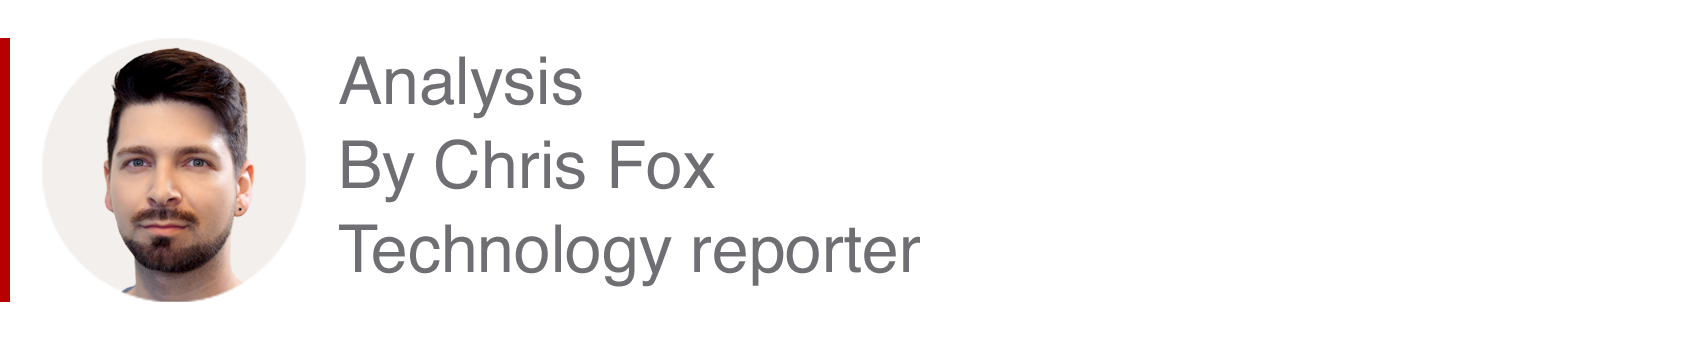 Analysis box by Chris Fox, technology reporter